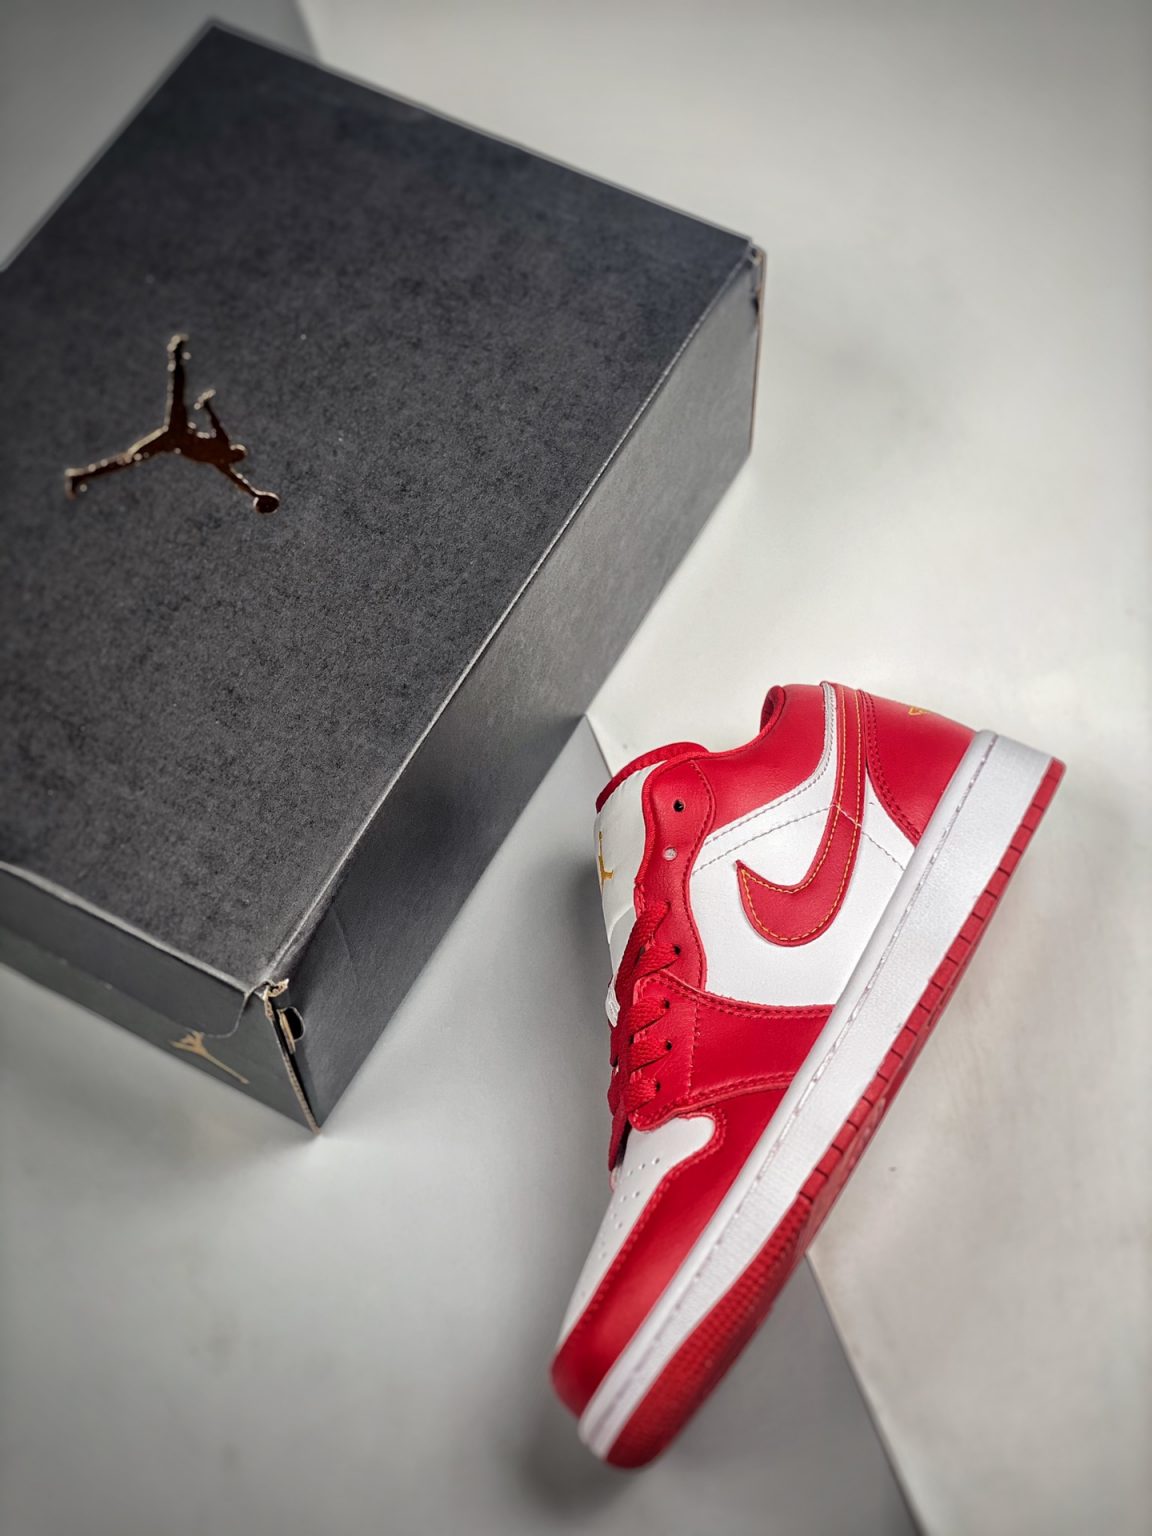 Air Jordan 1 Low “Cardinal” Red White 553558-607 For Sale – Sneaker Hello